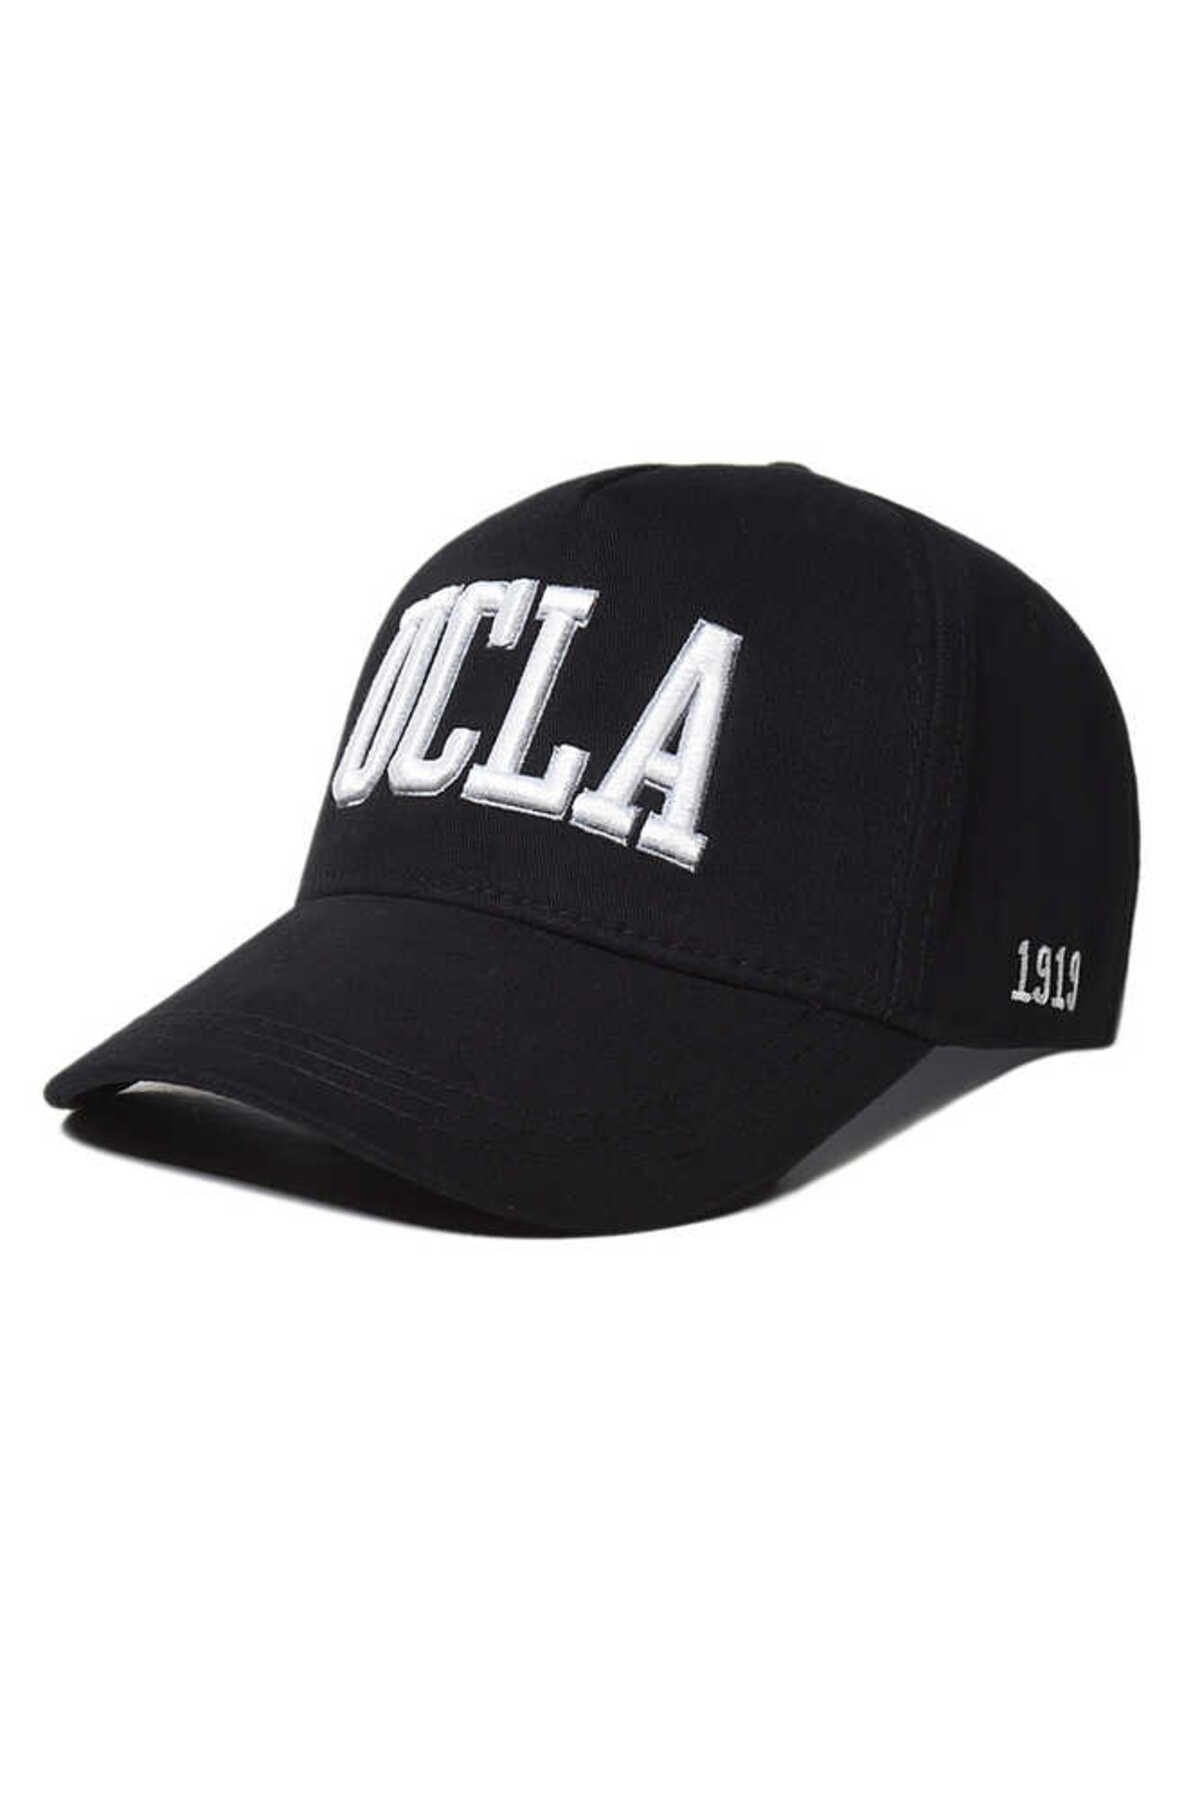 Ucla Ranch Siyah Baseball Cap Nakışlı Şapka